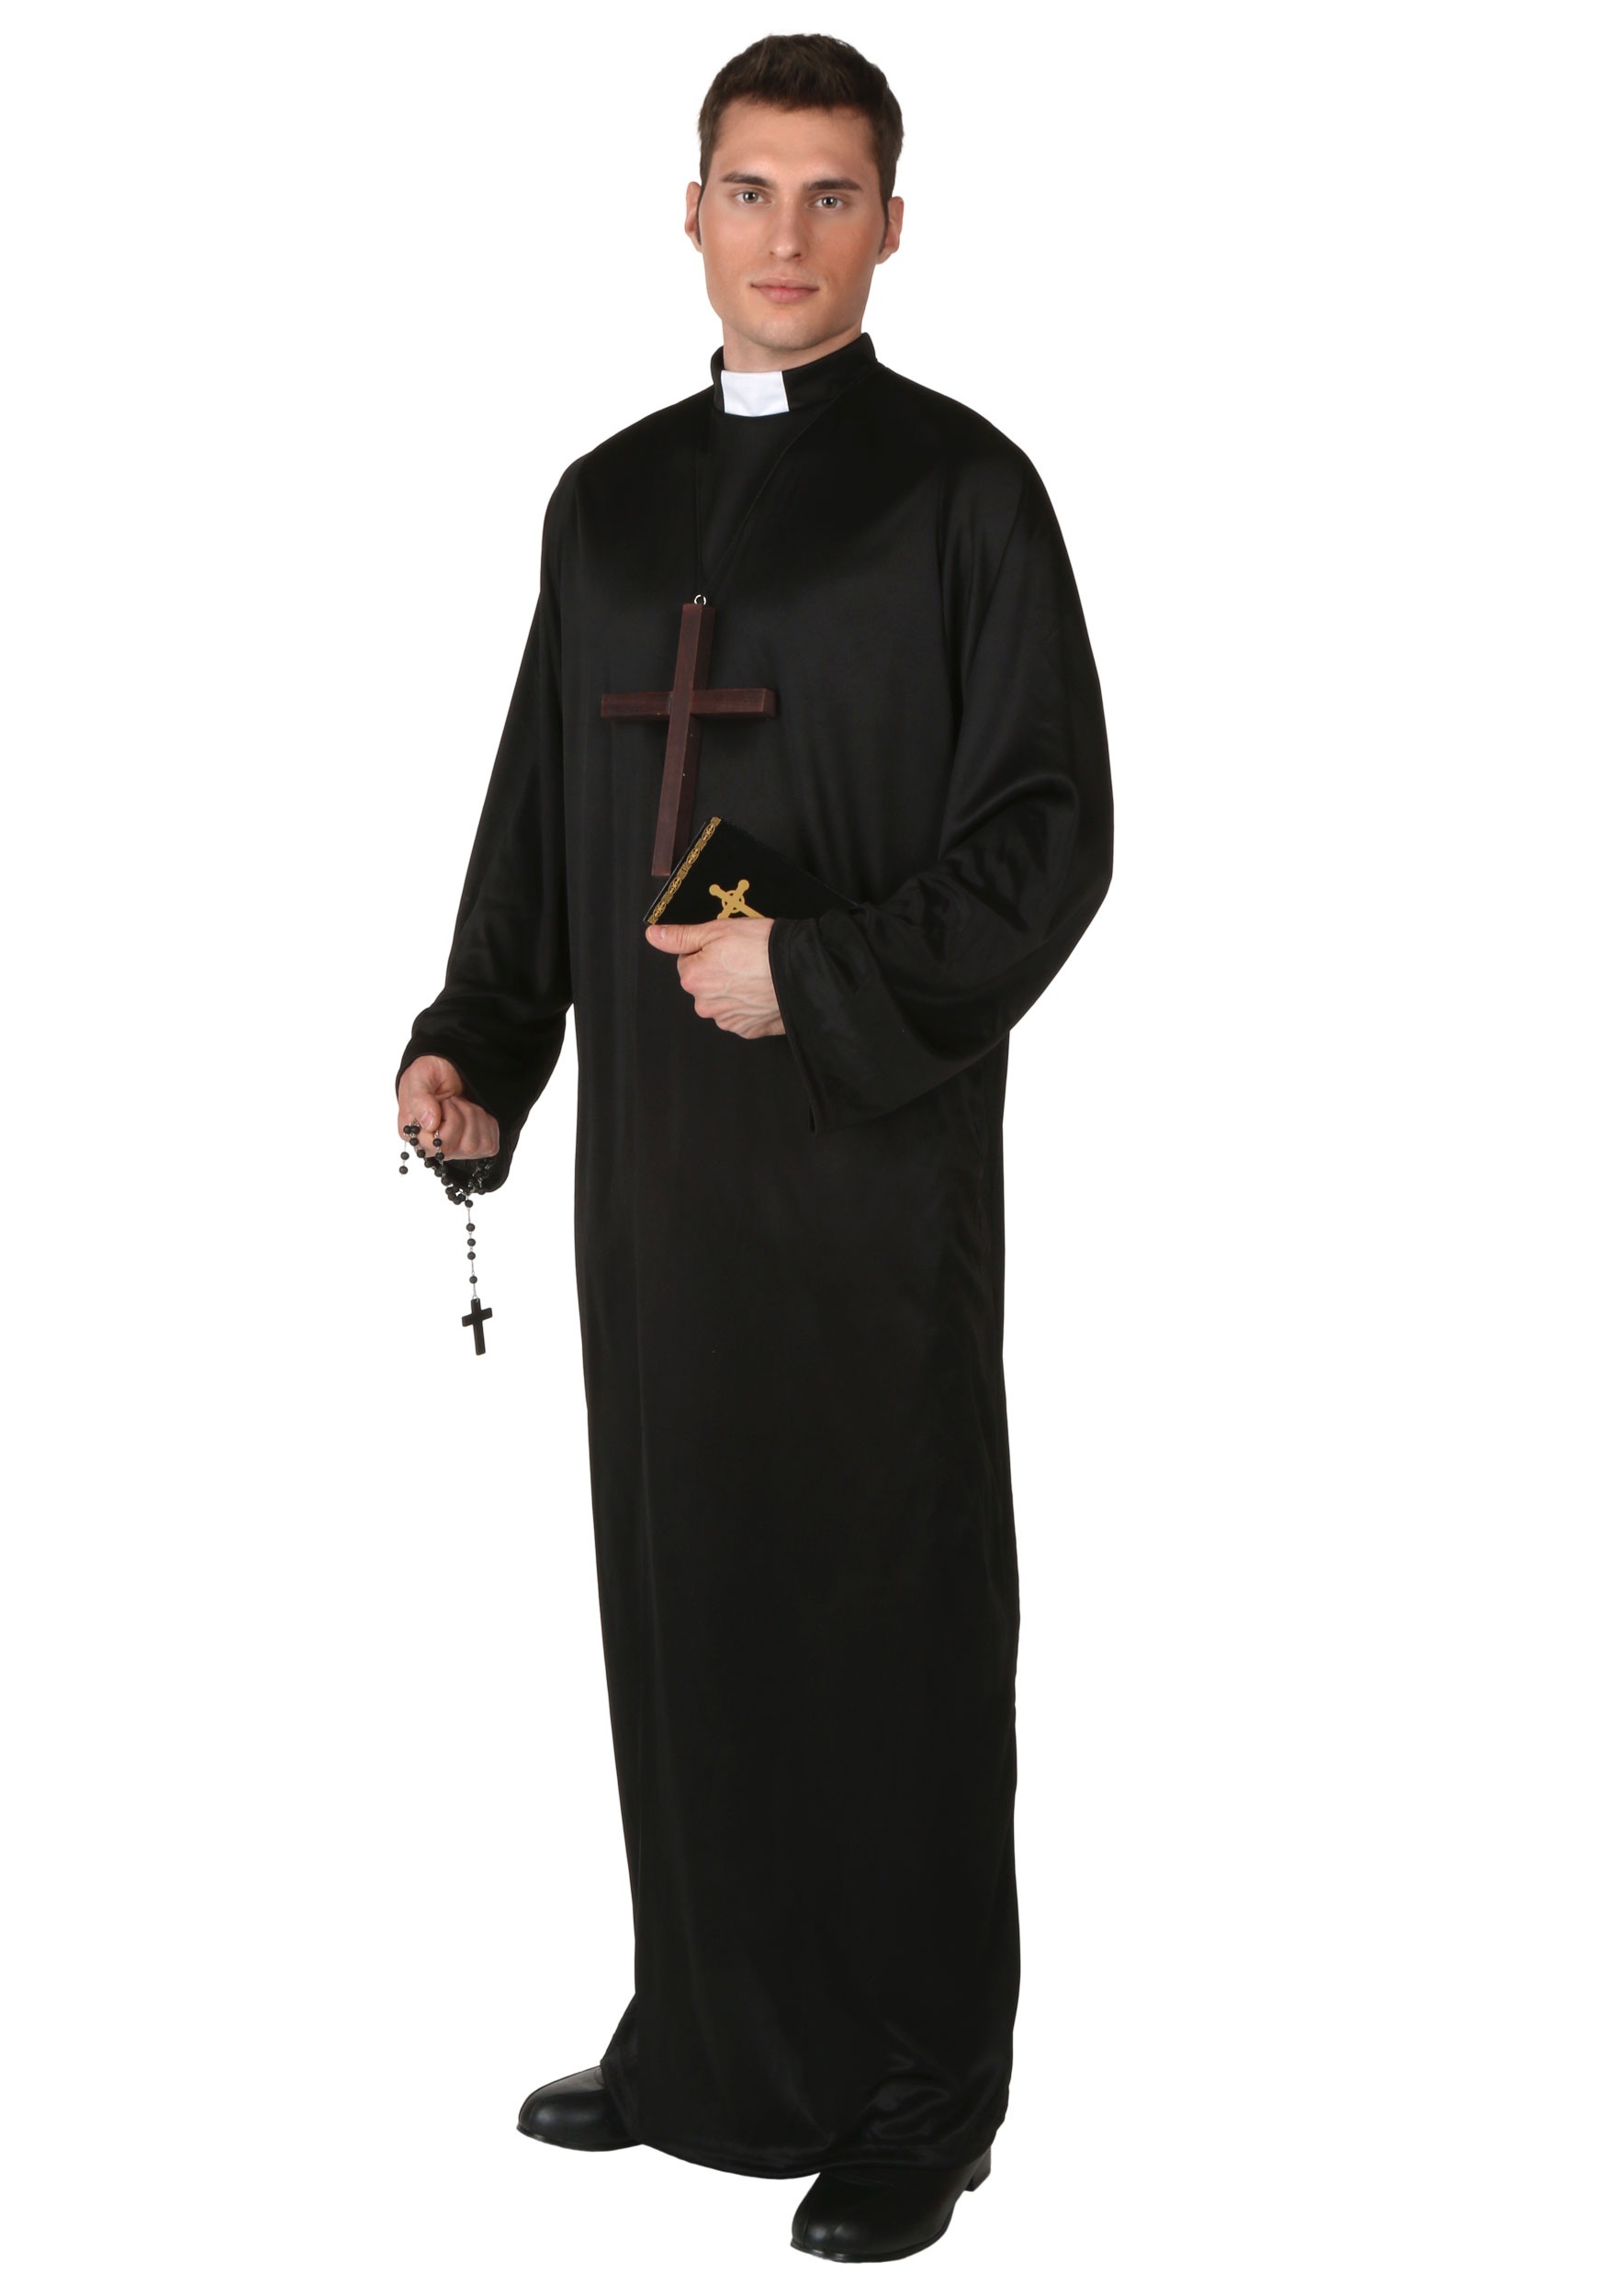 Black Priest Costume Christian Prayer Outfit